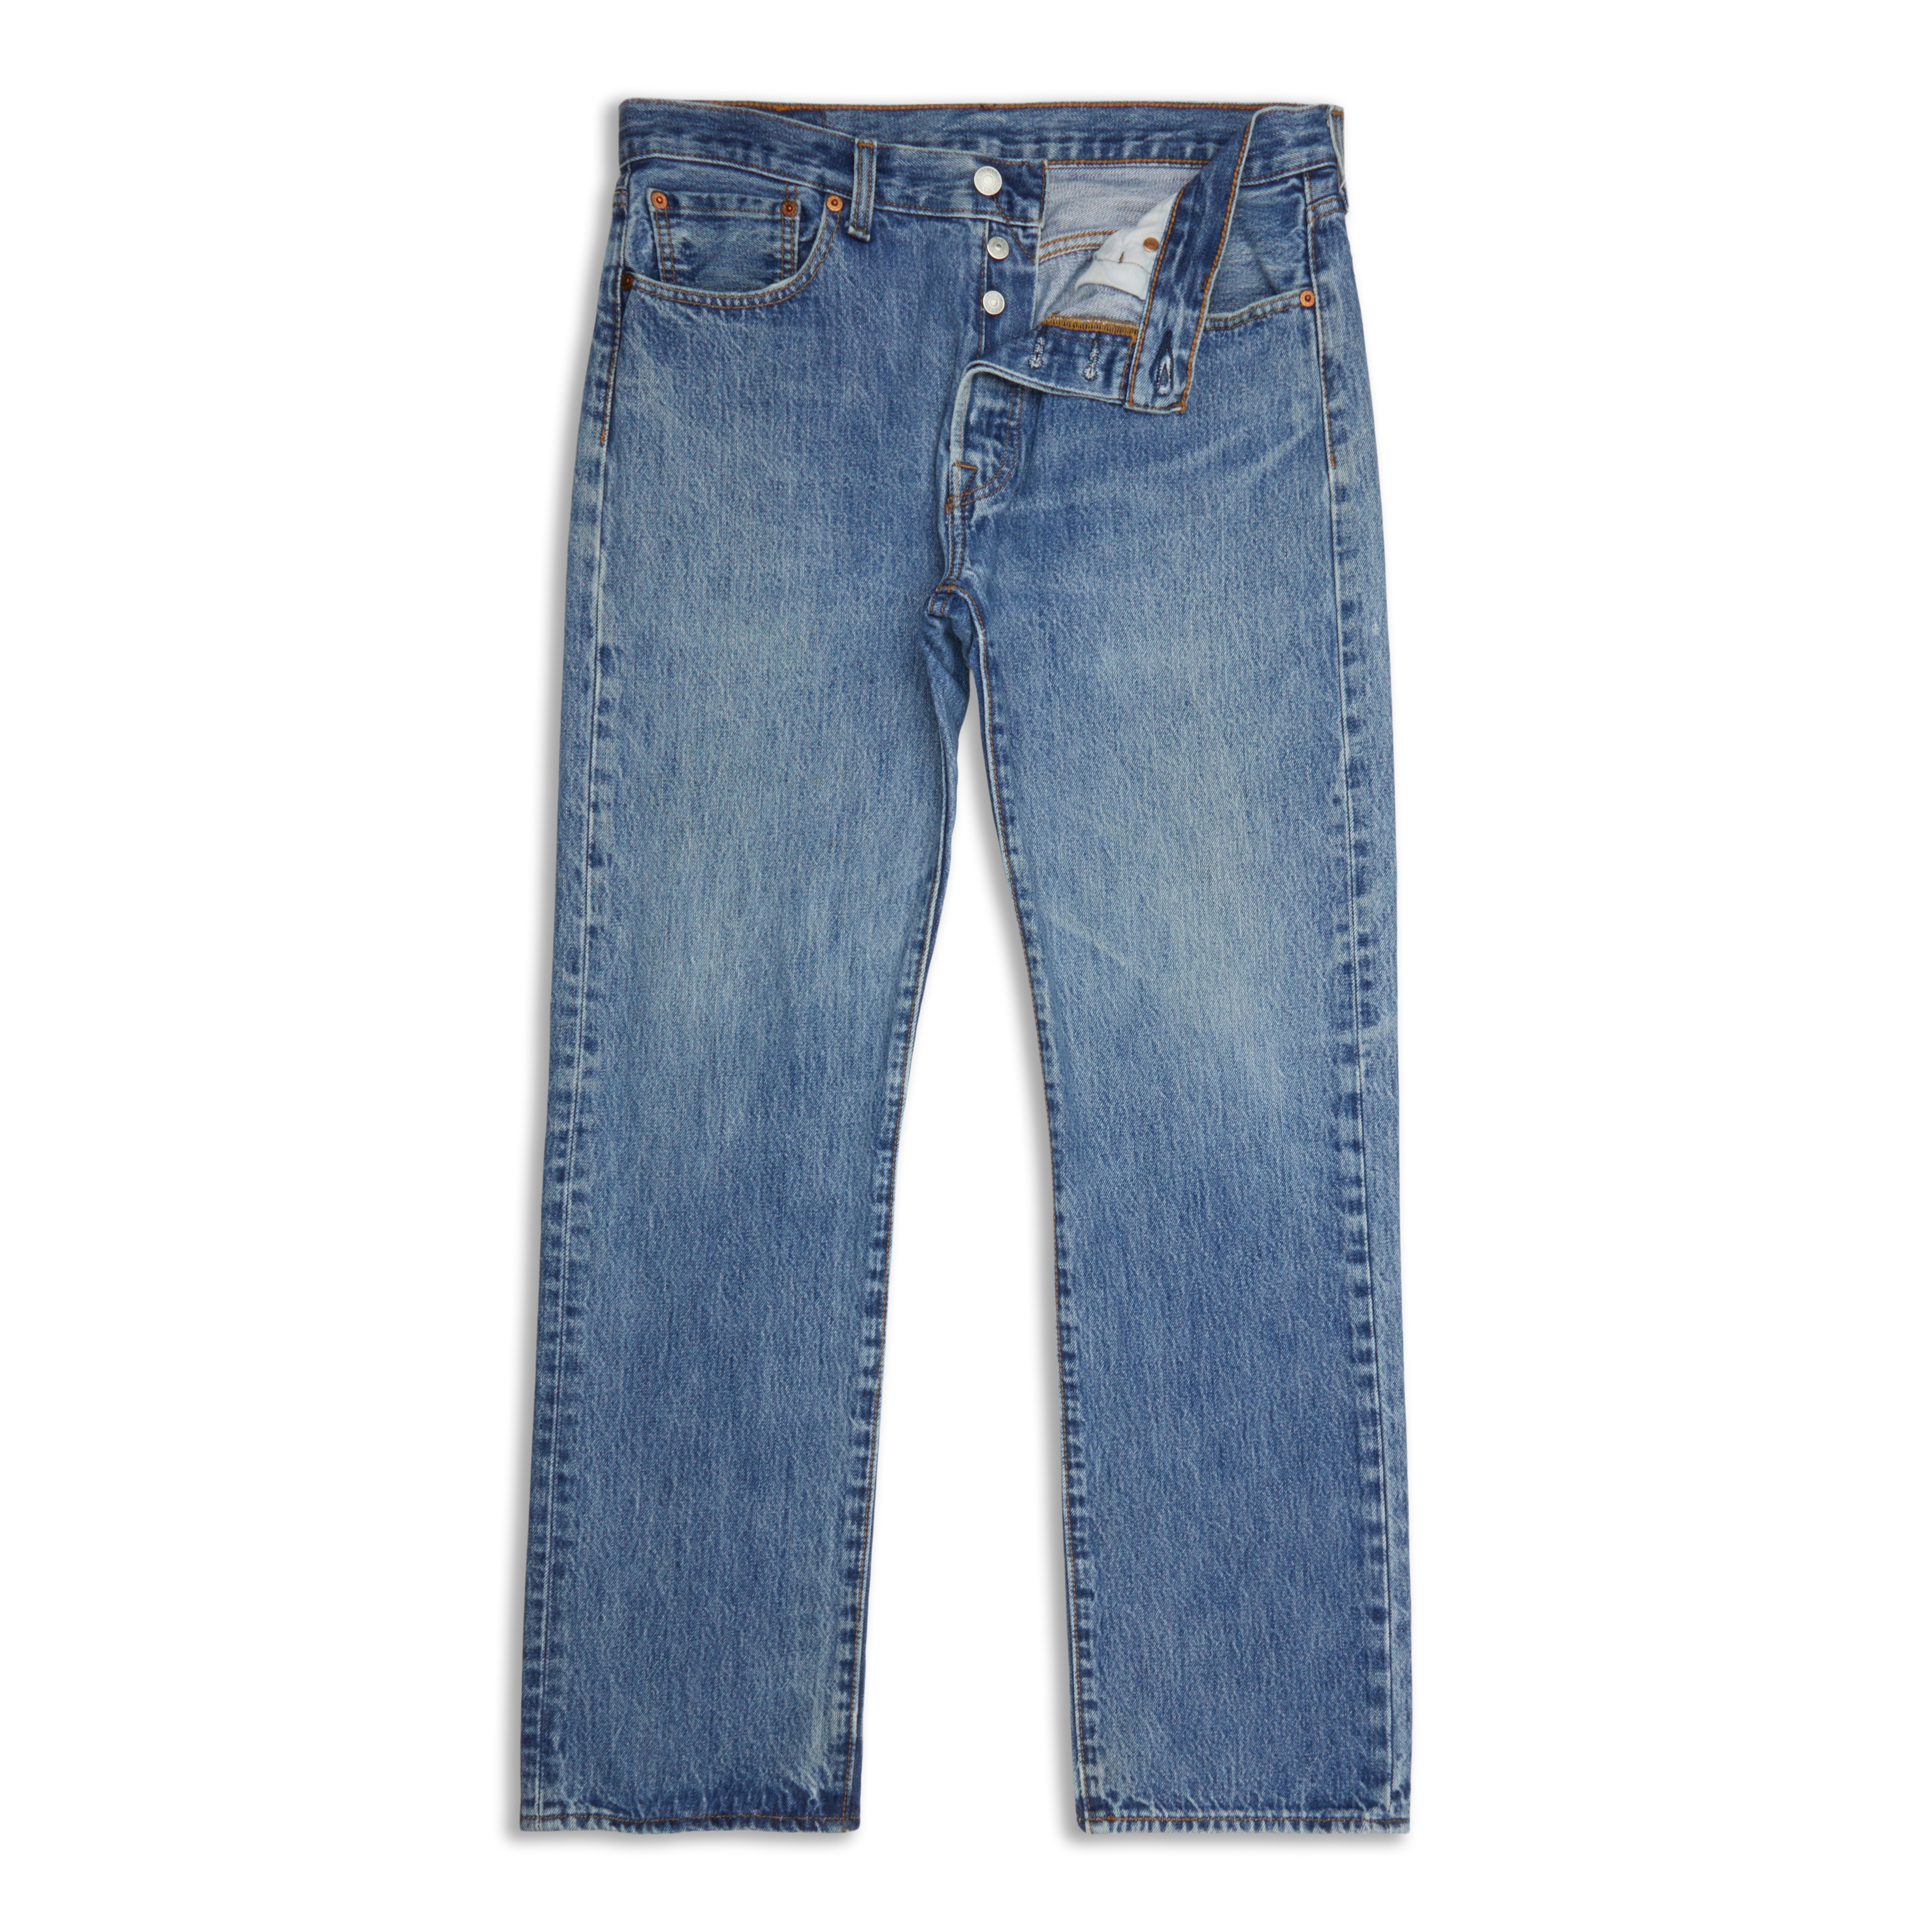 Levis 501 Original Fit Jeans, Stonewash, Men's – Urban Industry